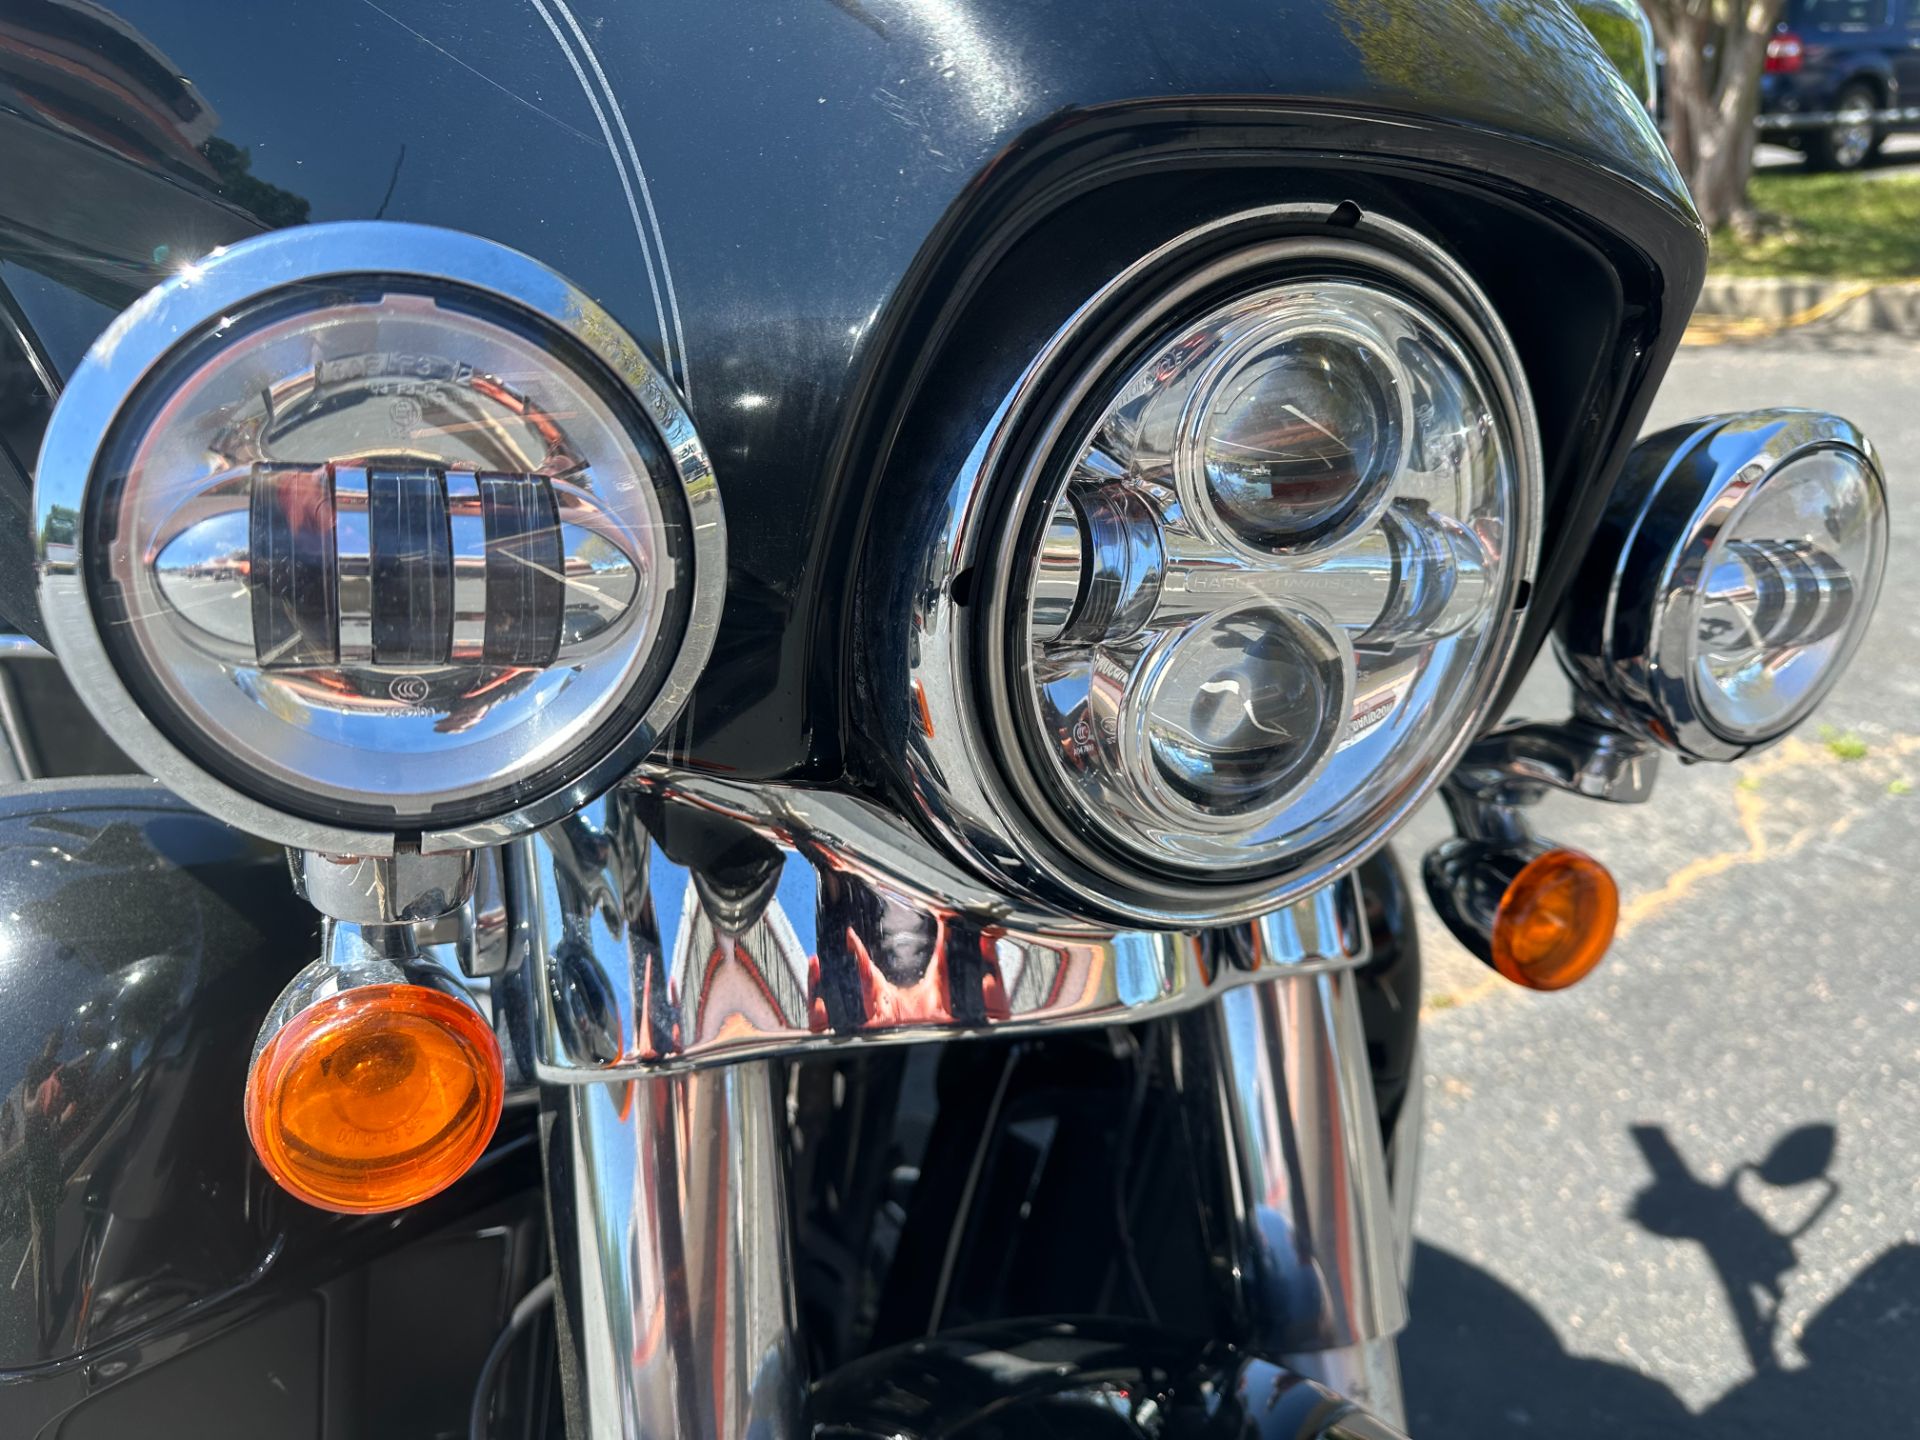 2019 Harley-Davidson Electra Glide® Ultra Classic® in Mobile, Alabama - Photo 3